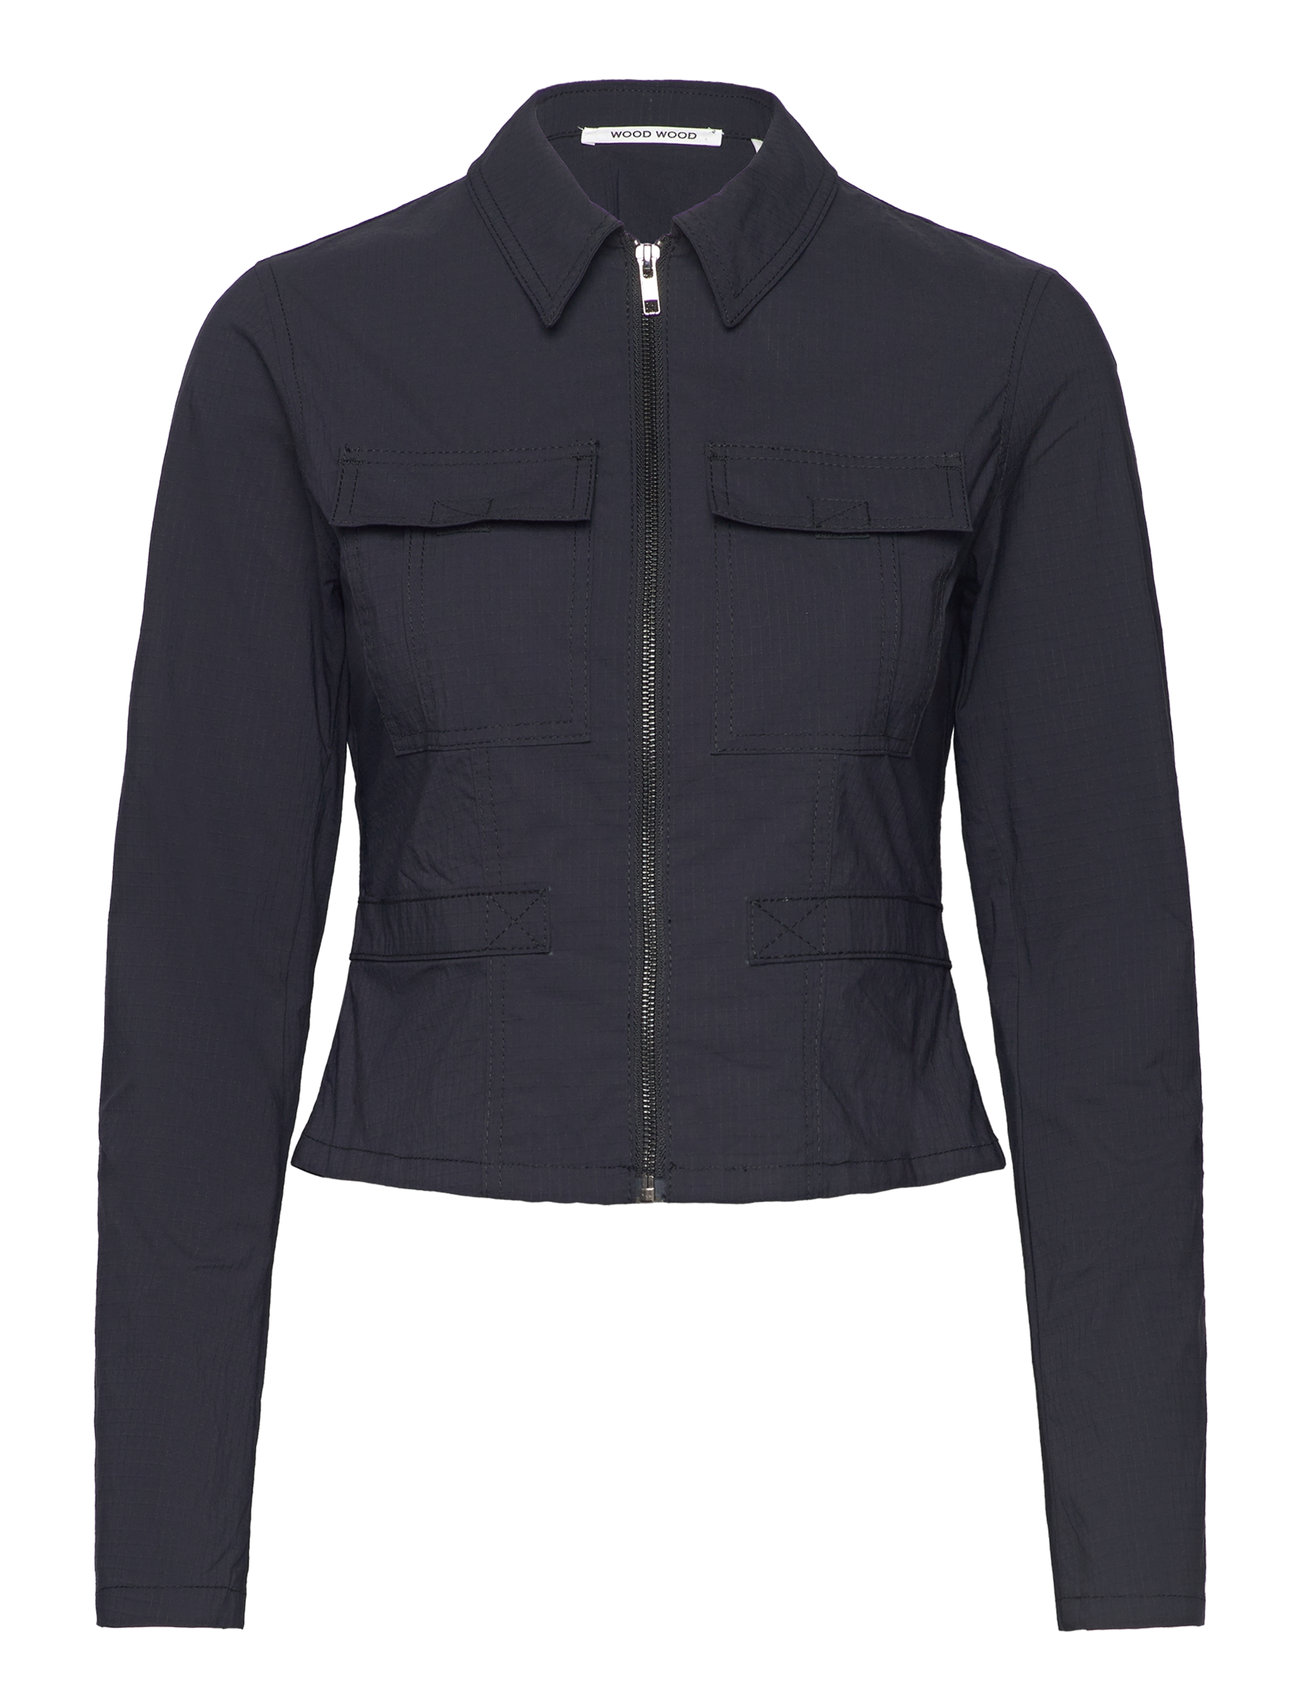 Ana Cargo Shirt Outerwear Jackets Light-summer Jacket Black Wood Wood